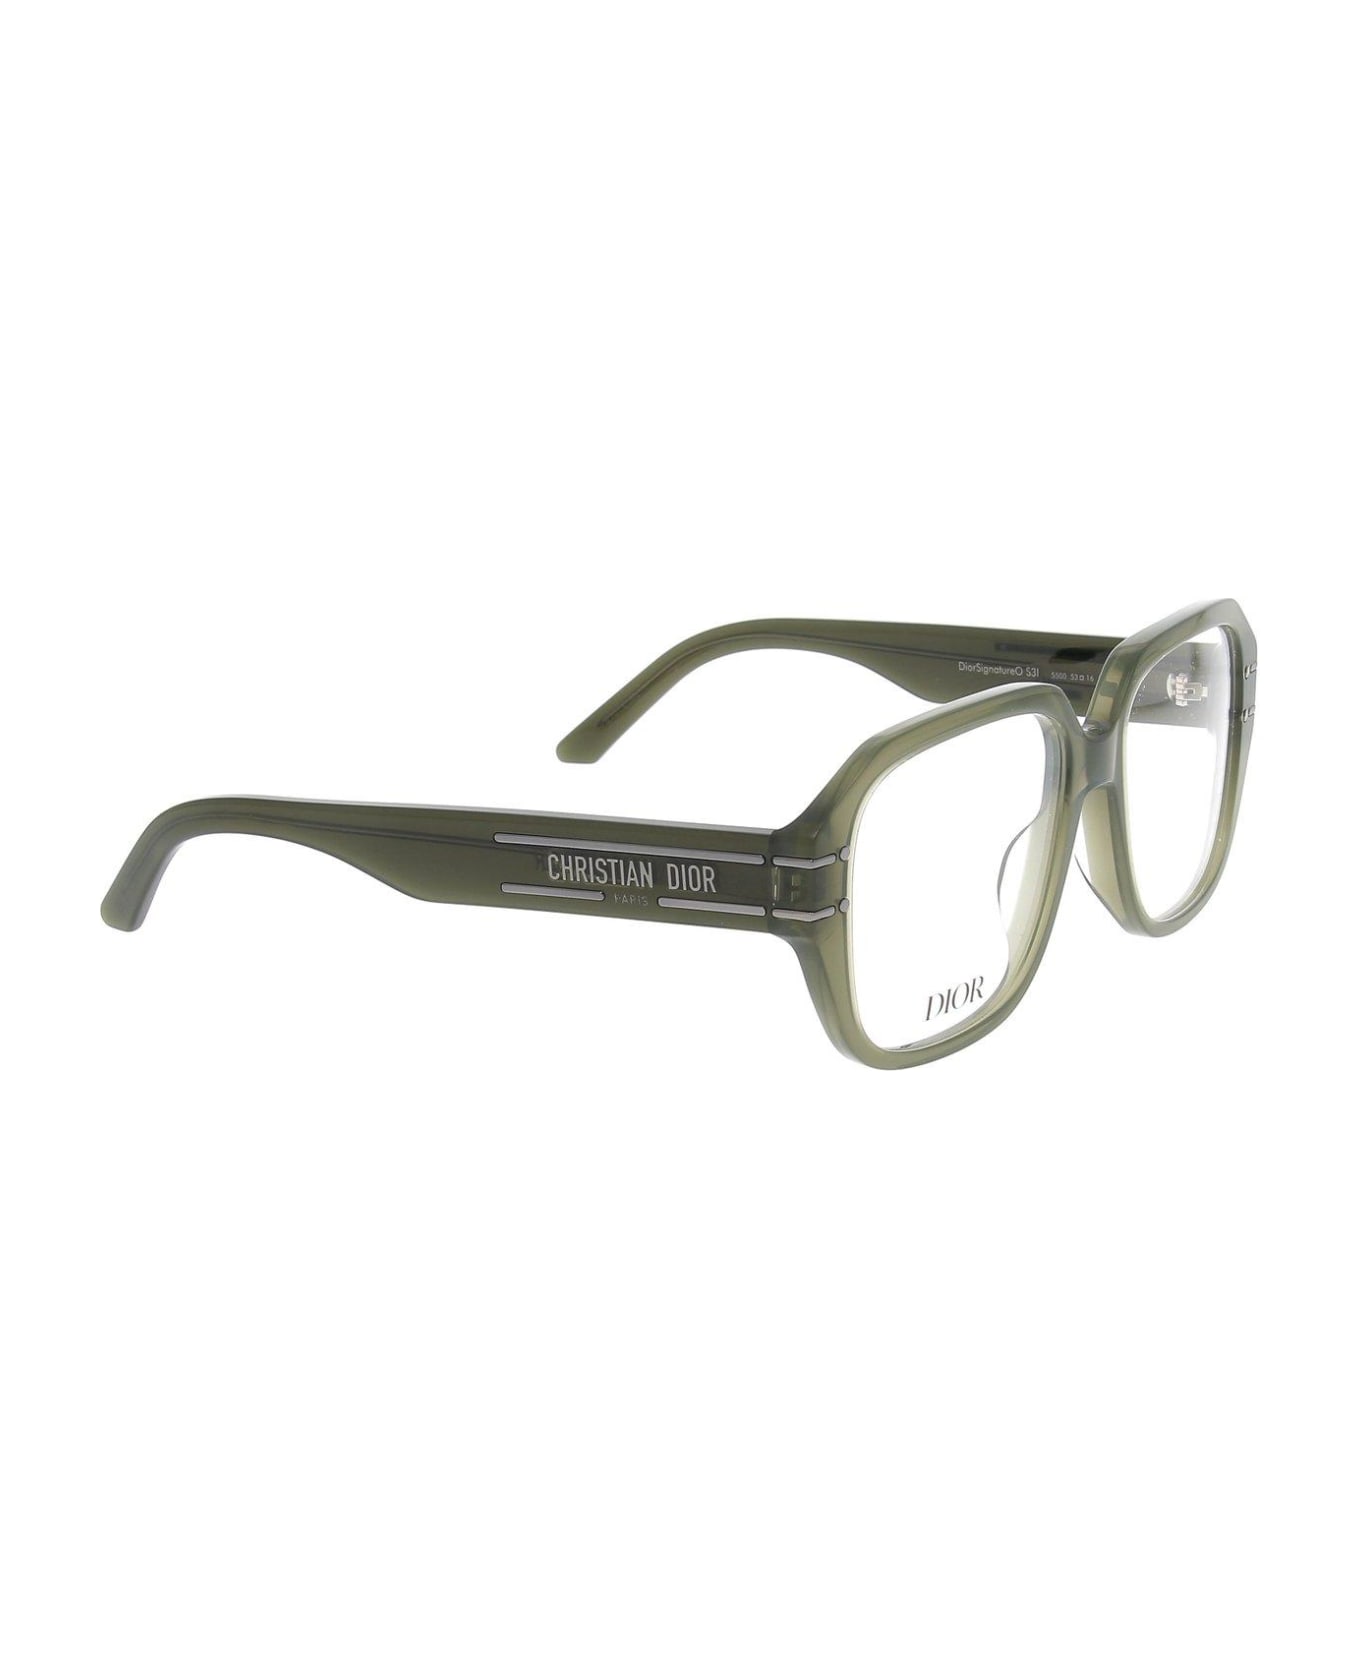 Dior Eyewear Square Frame Glasses - 5500 アイウェア